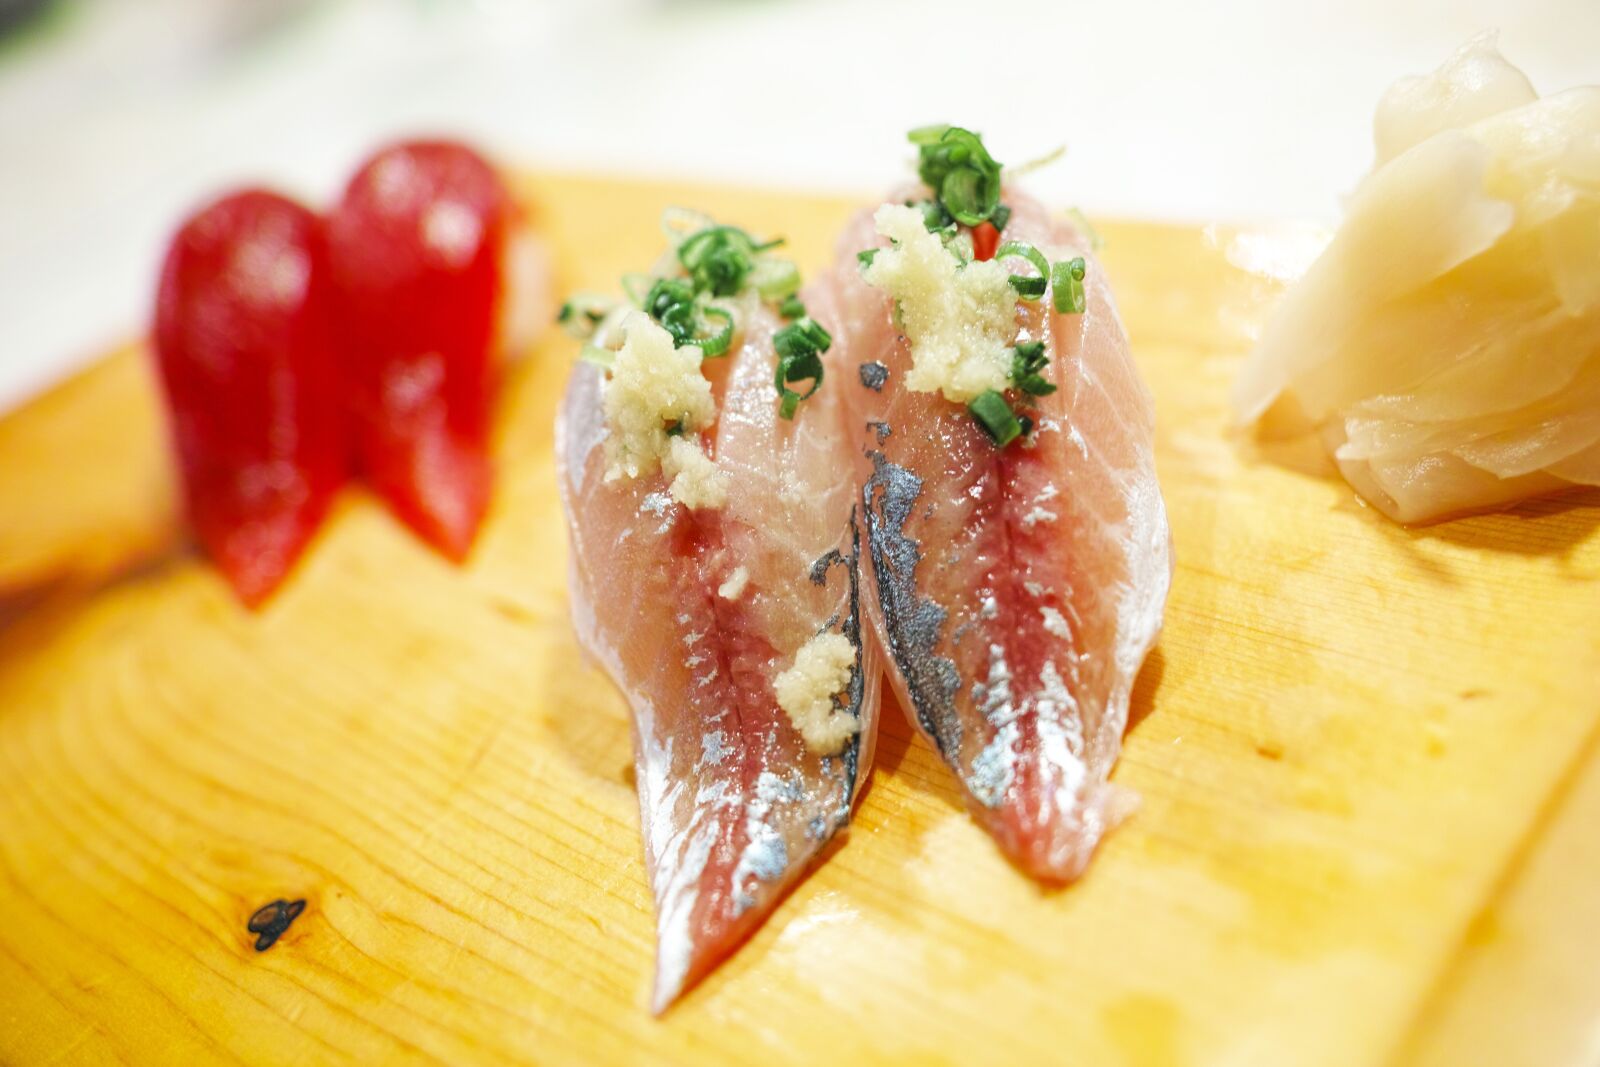 Sigma DP1 Merrill sample photo. Food, sushi, restaurant photography